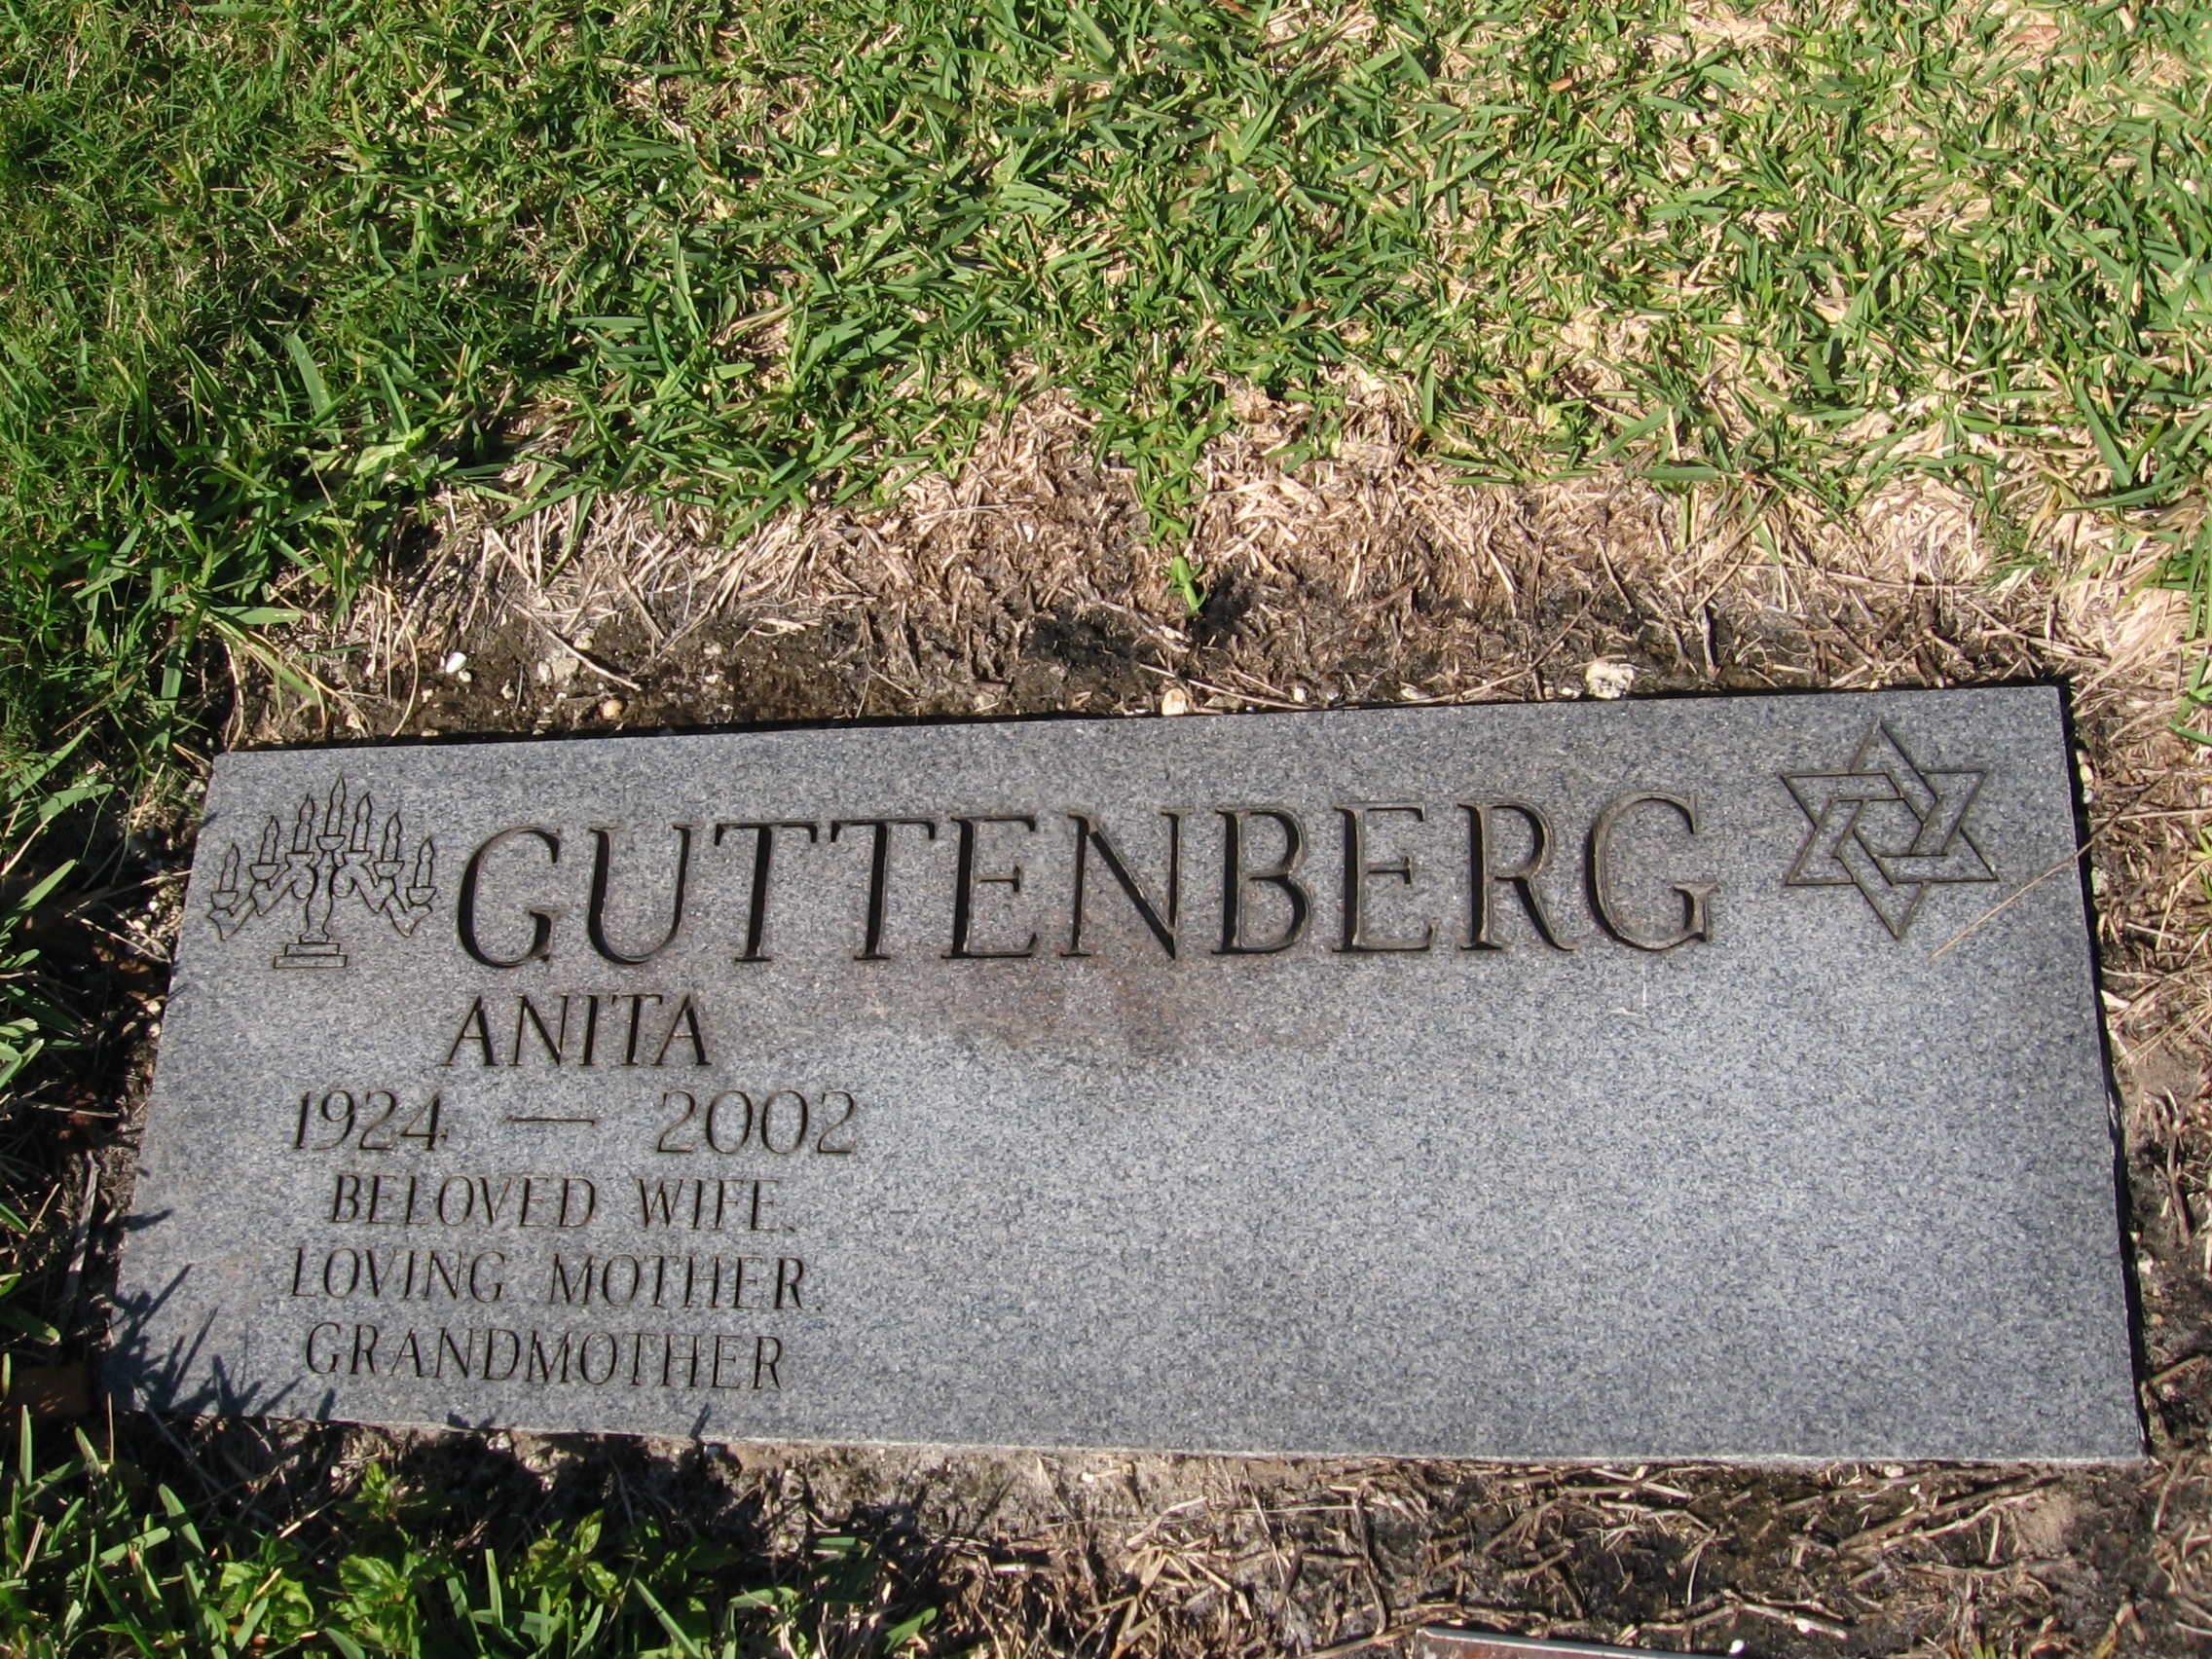 Anita Guttenberg